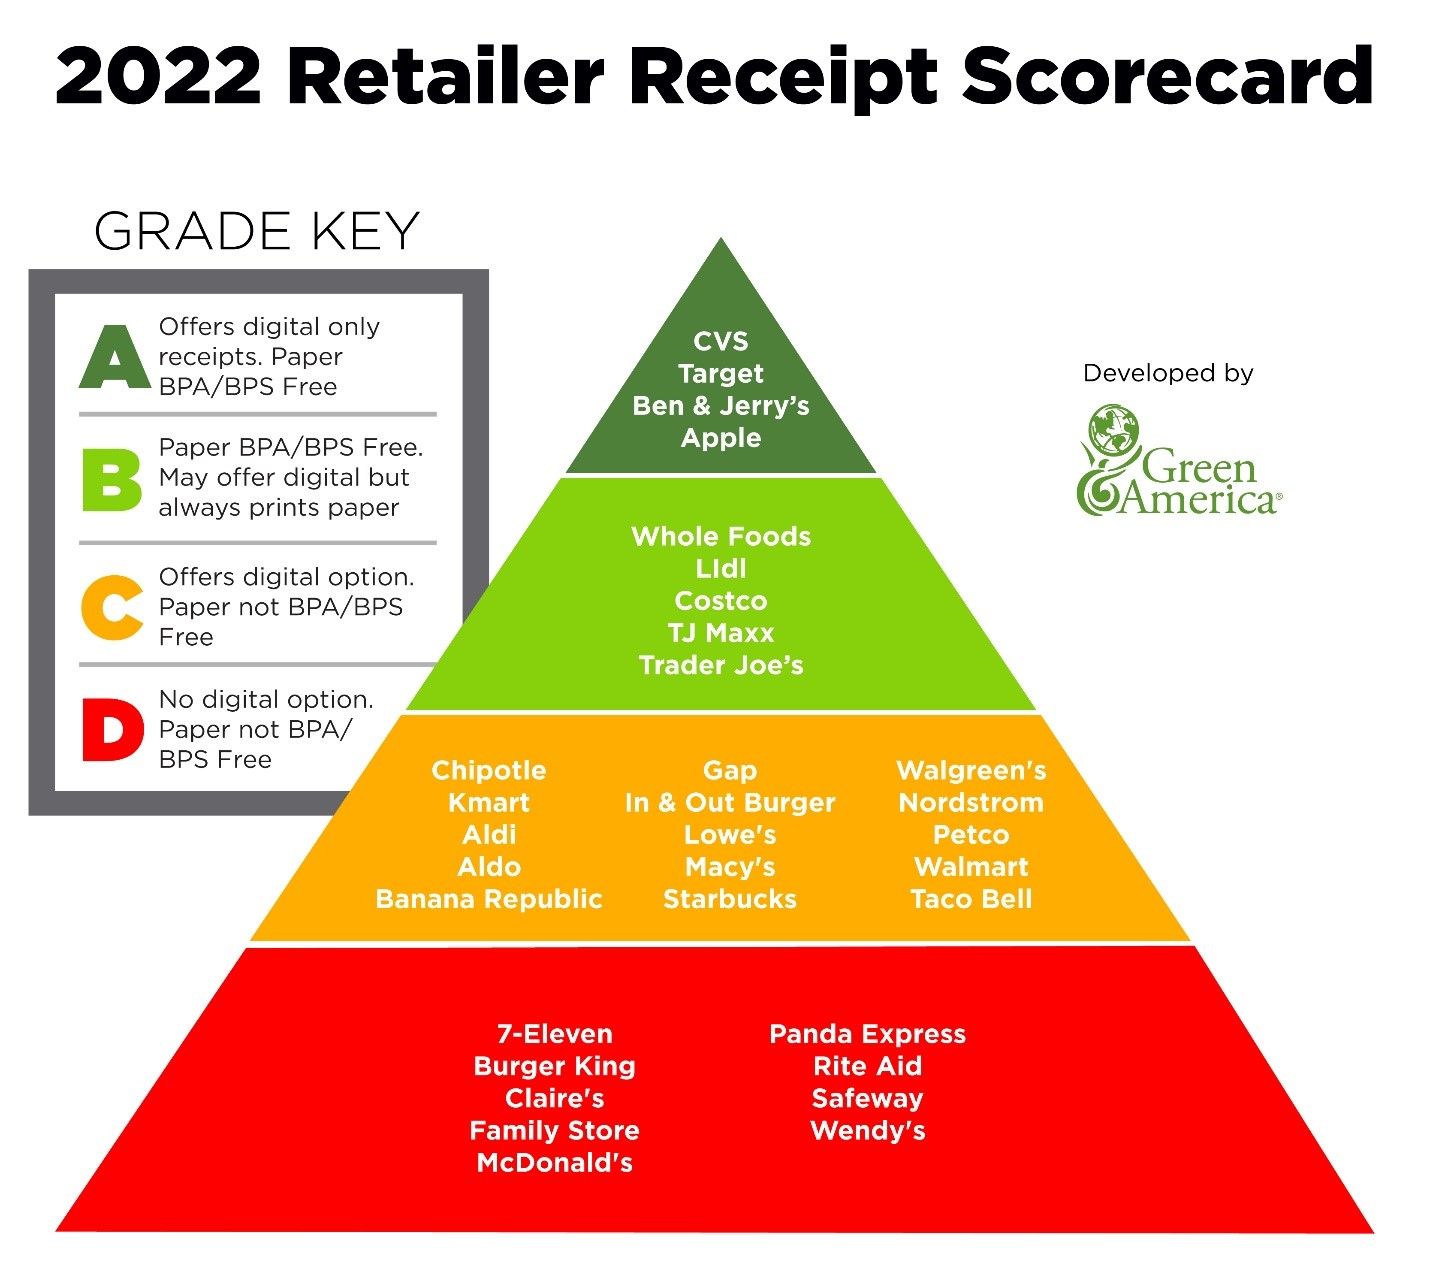 Green America Retailer Receipt Scorecard. "A" Grade = CVS, Target, Ben & Jerry's, Apple. "B Grade = Whole Foods, Lidl, Costco, TJ Maxx, Trader Joe's. "C" Grade = Chipotle, Gap, Walgreen's, Kmart, In & Out Burger, Nordstrom, Aldi, Lowe's, Petco, Aldo, Macy's, Walmart, Banana Republic, Starbucks, Taco Bell. "D" Grade = 7-Eleven, Panda Express, Burger King, Rite Aid, Claire's, Safeway, Family Store, Wendy's, McDonald's.